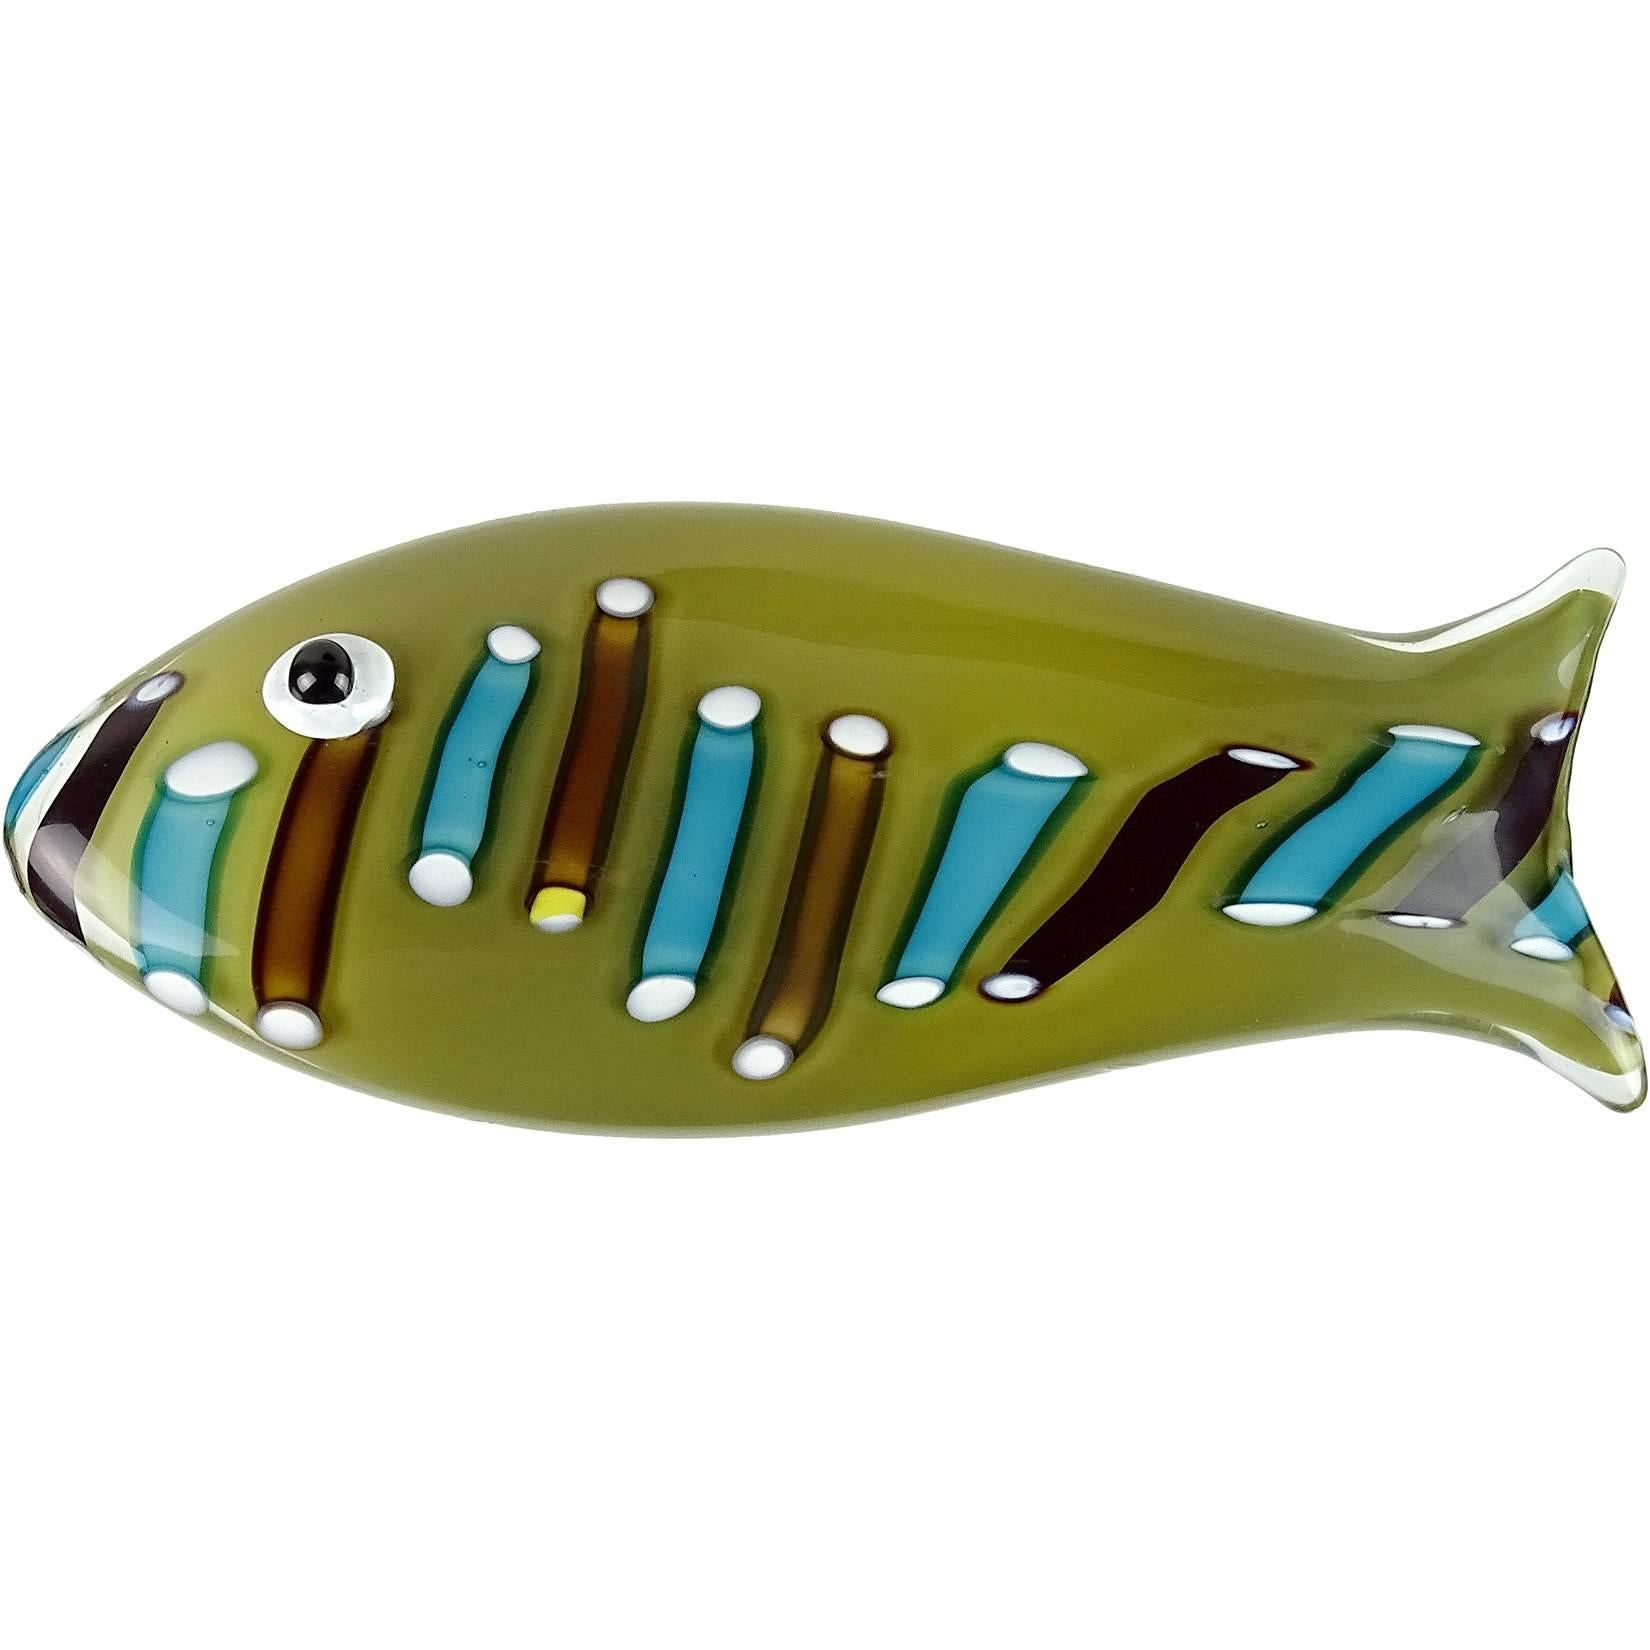 Ken Scott Venini Murano Olive Green Italian Art Glass Fish Paperweight Sculpture